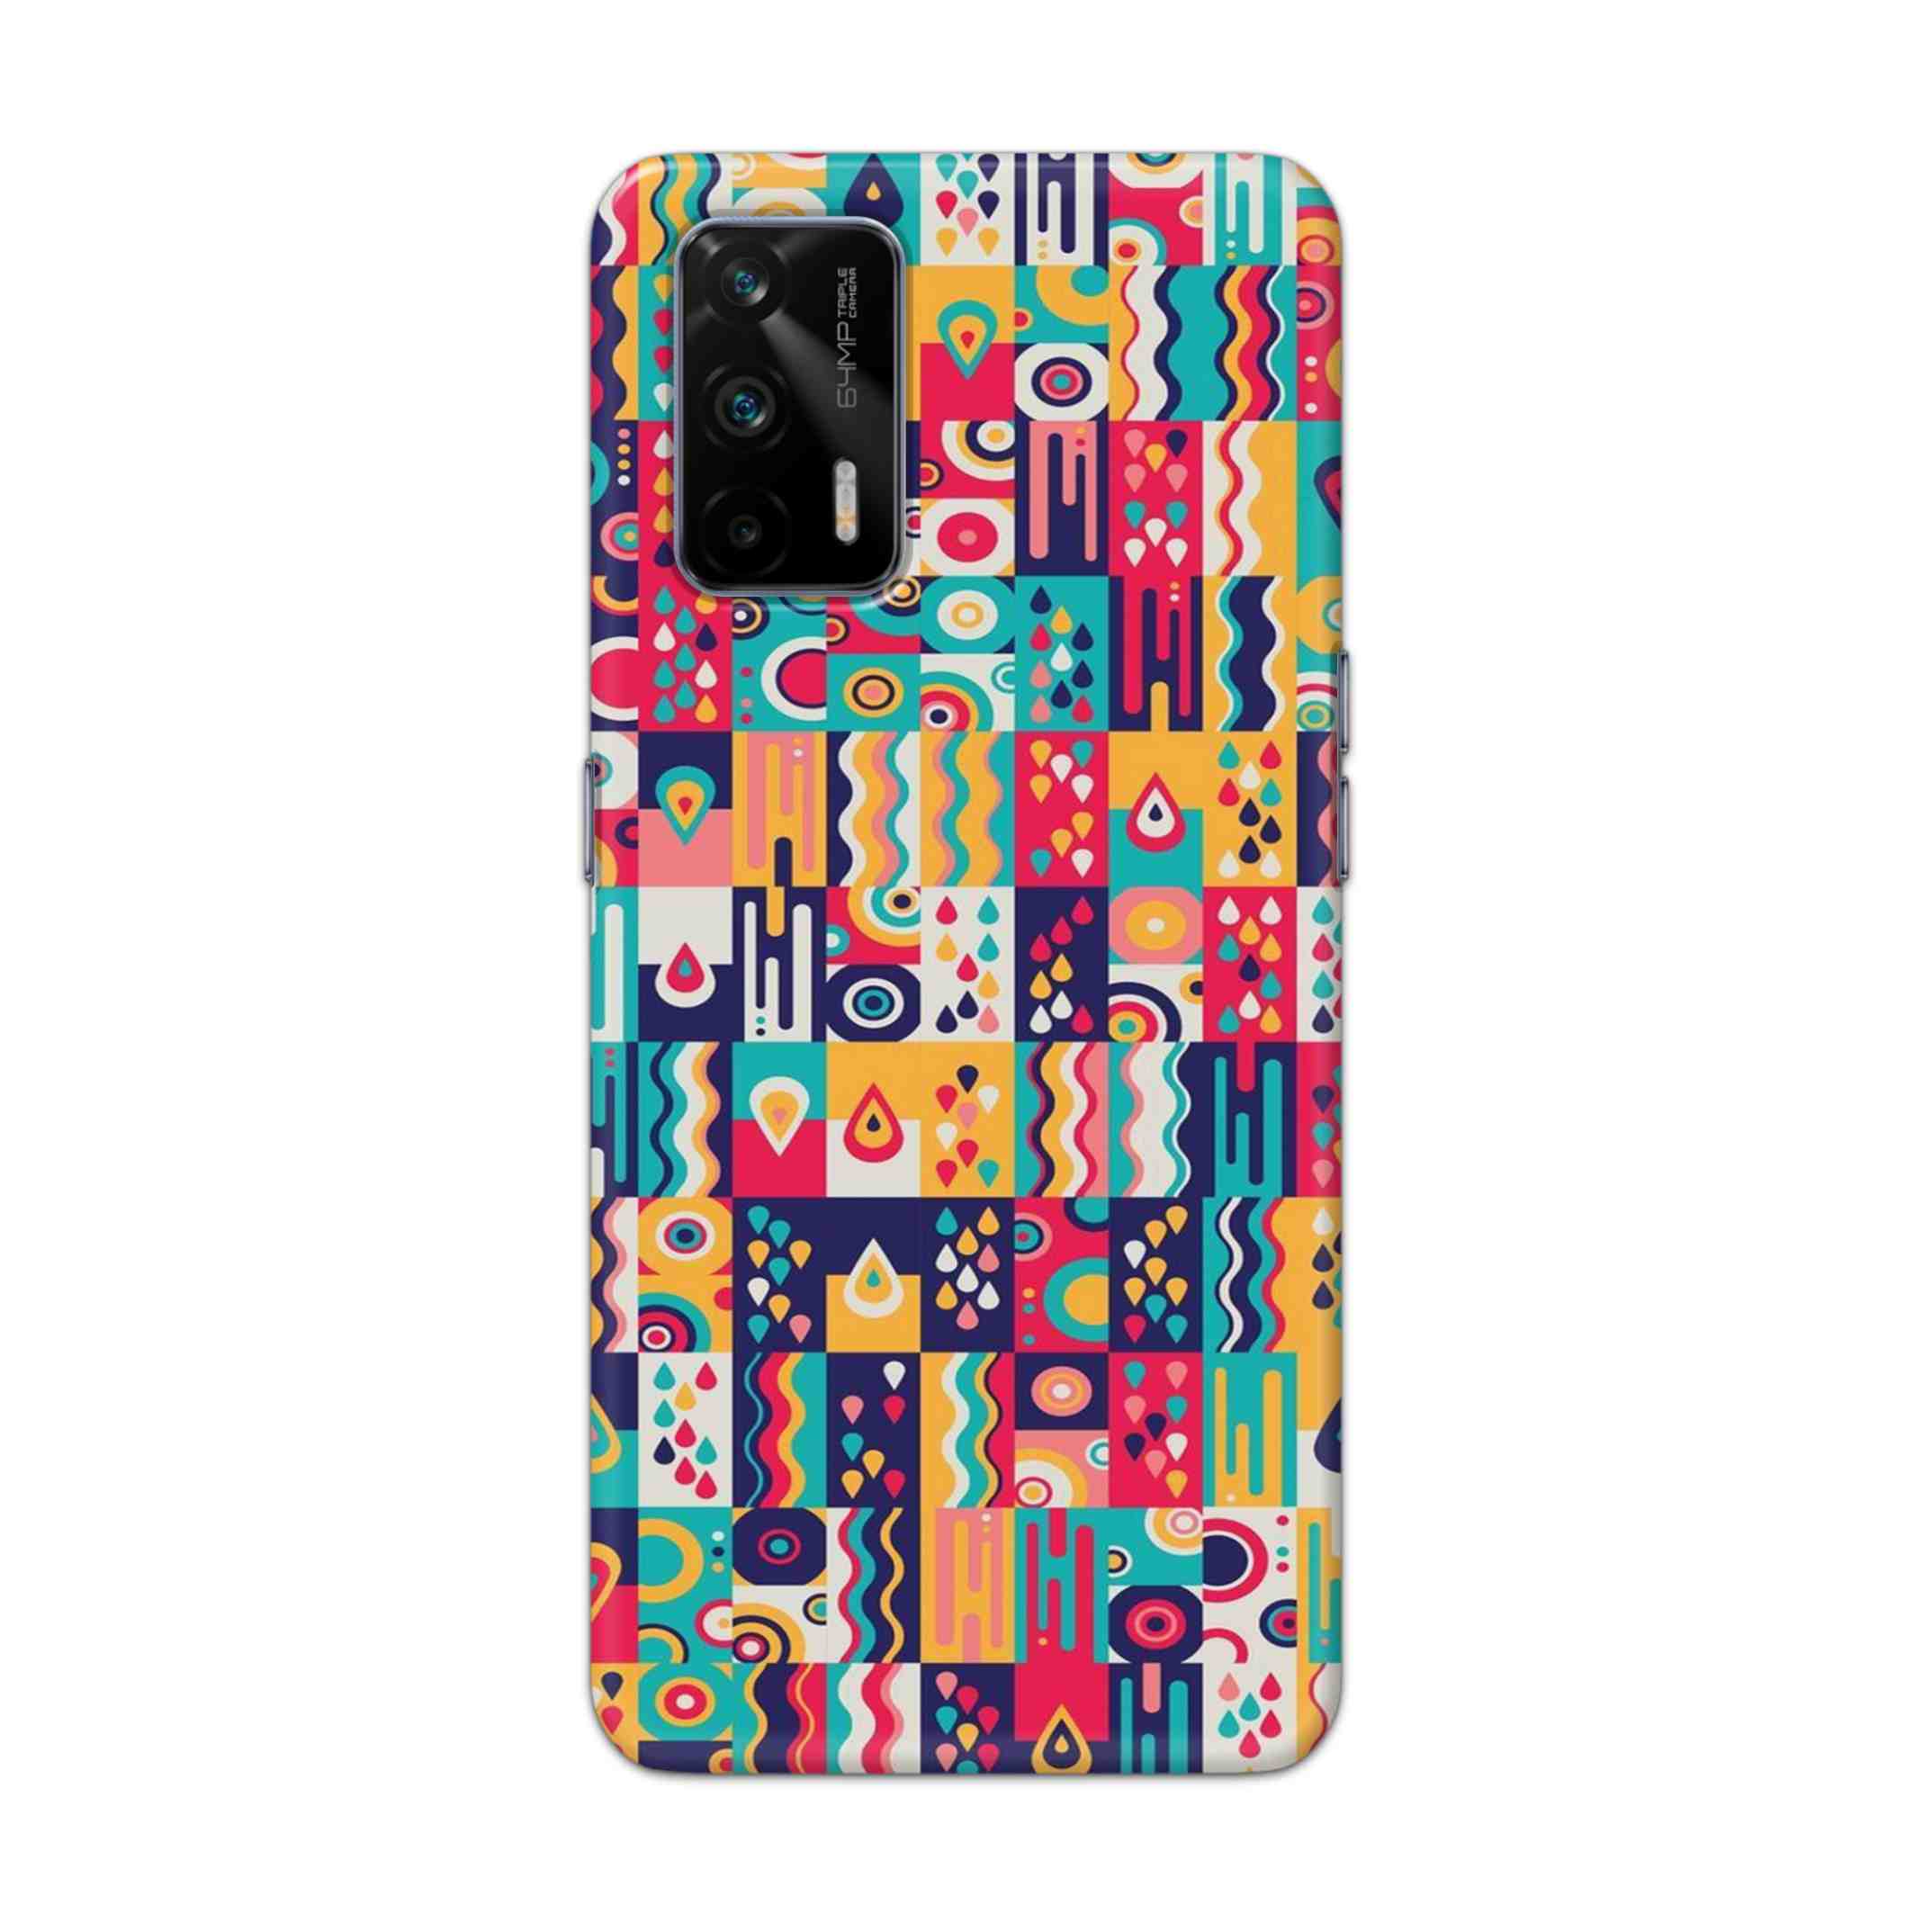 Buy Art Hard Back Mobile Phone Case Cover For Realme GT 5G Online